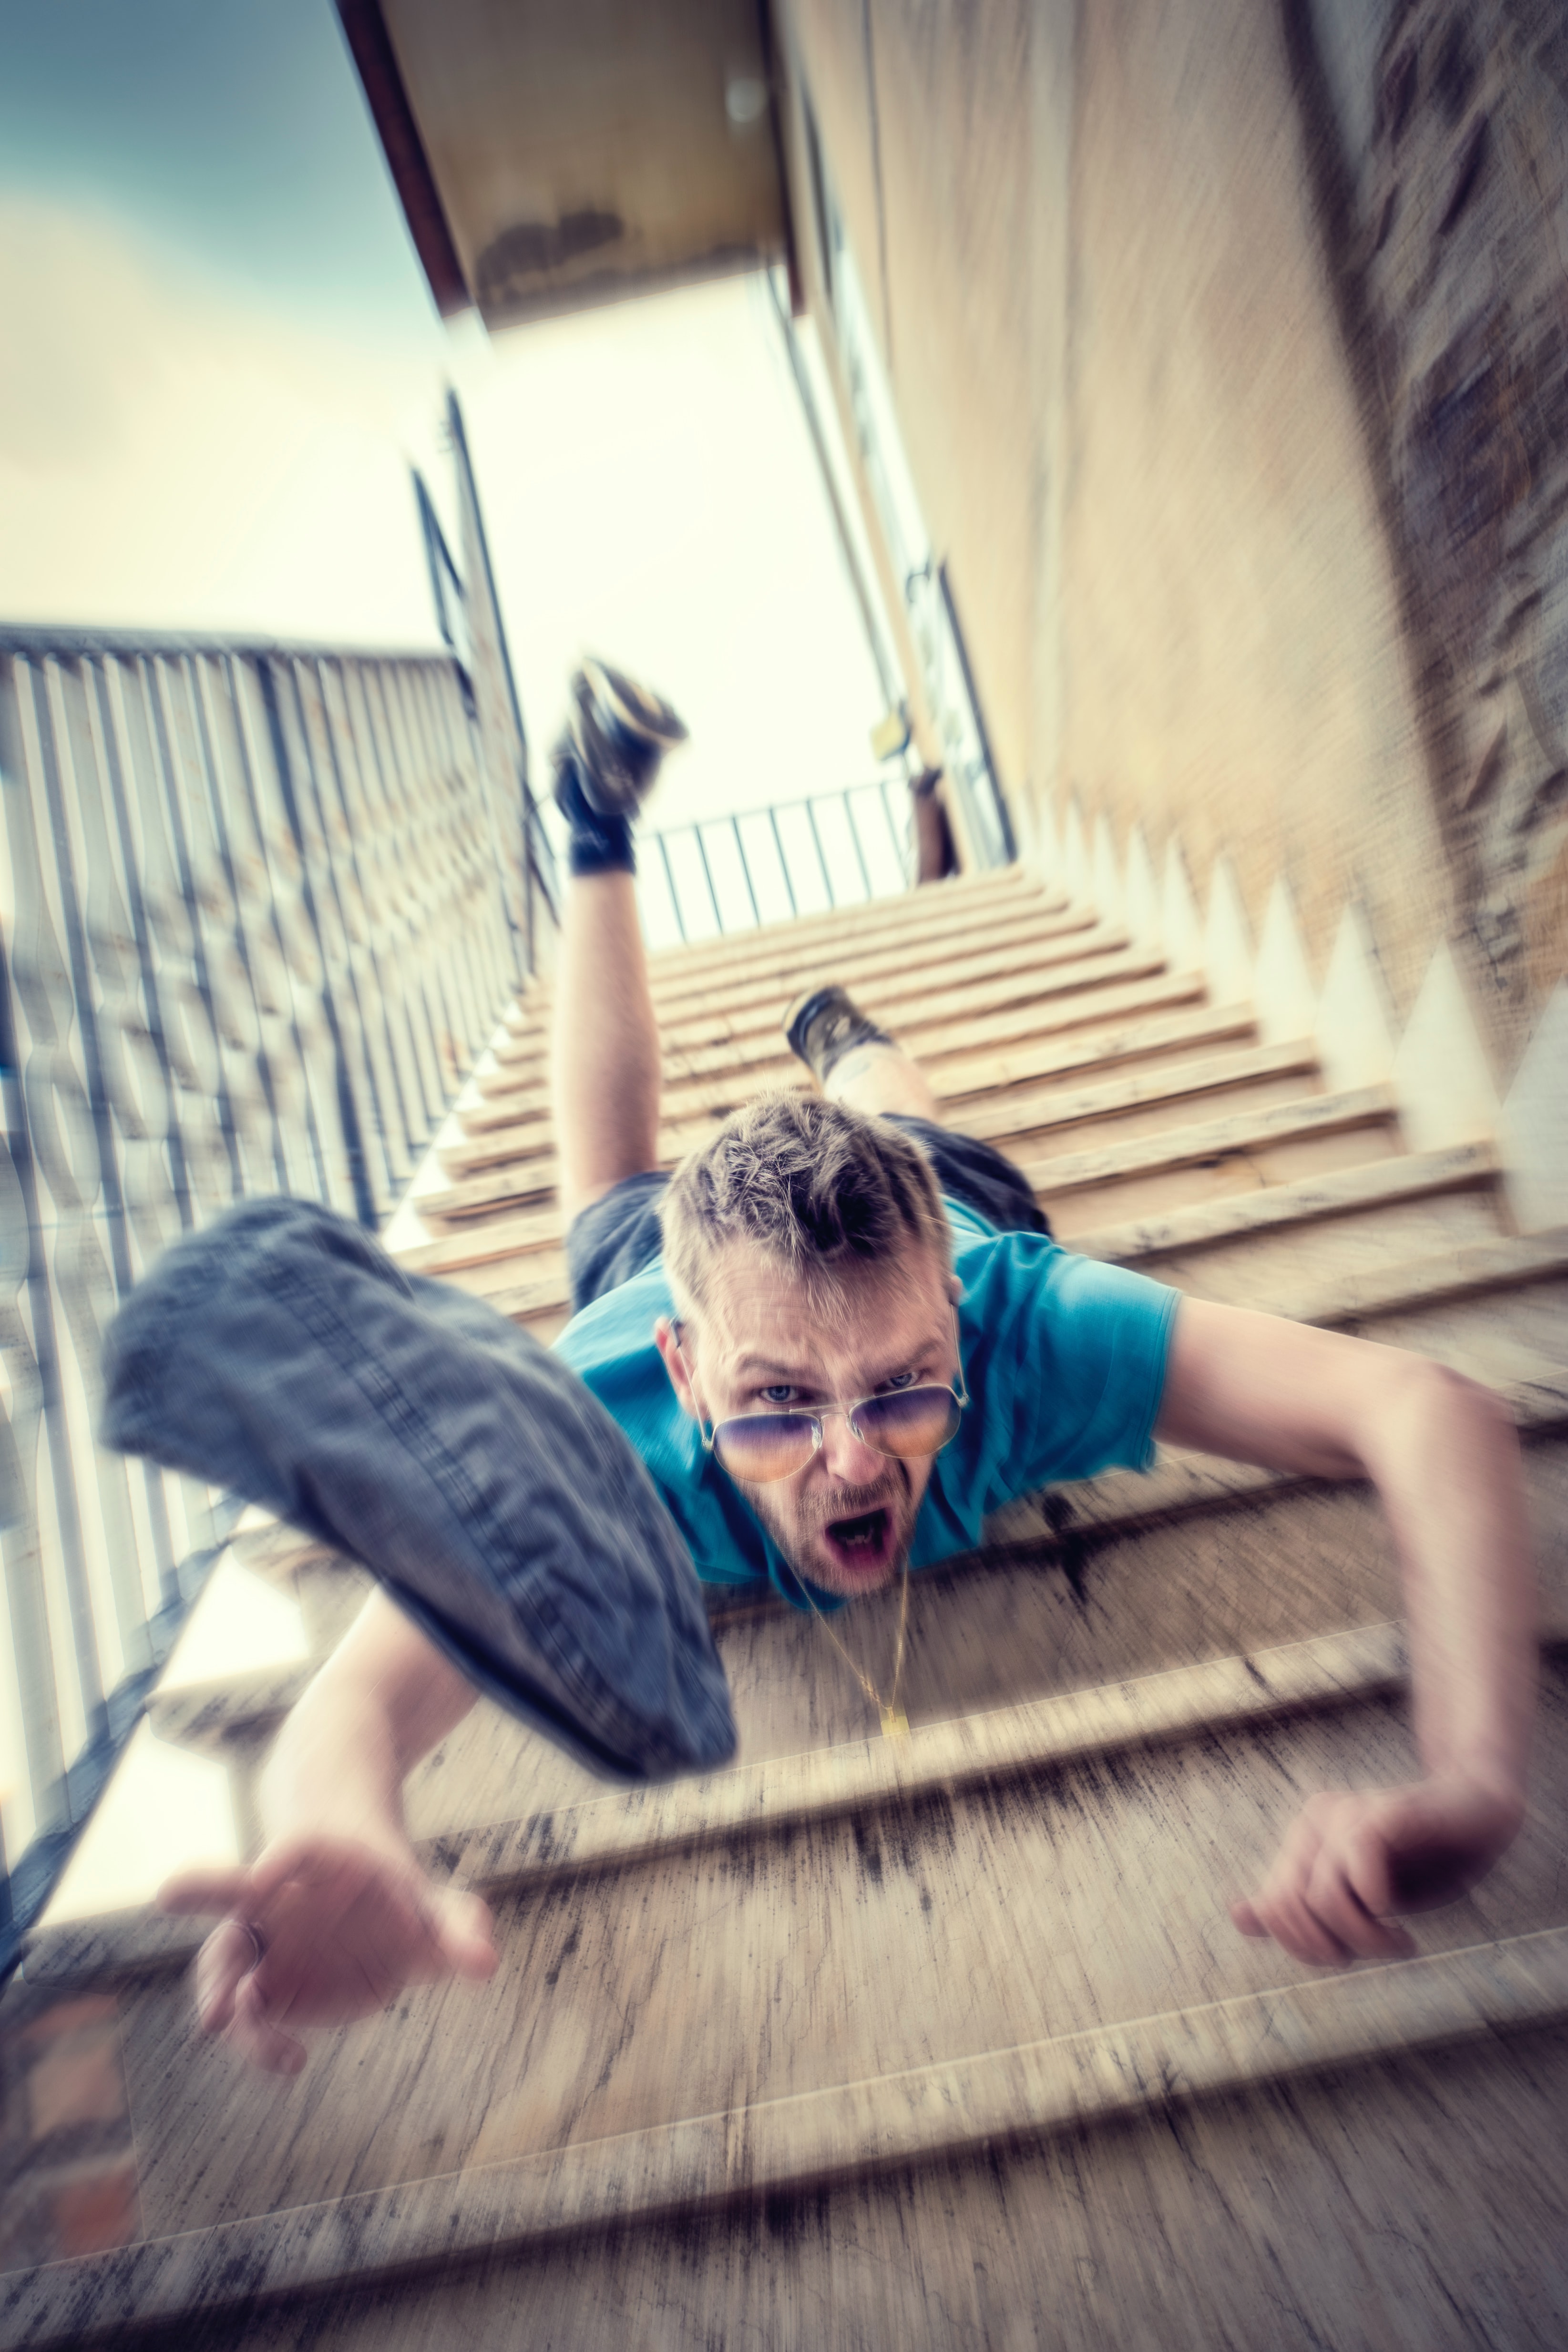 Man falling down stairs; image by Sammy Williams, via Unsplash.com.